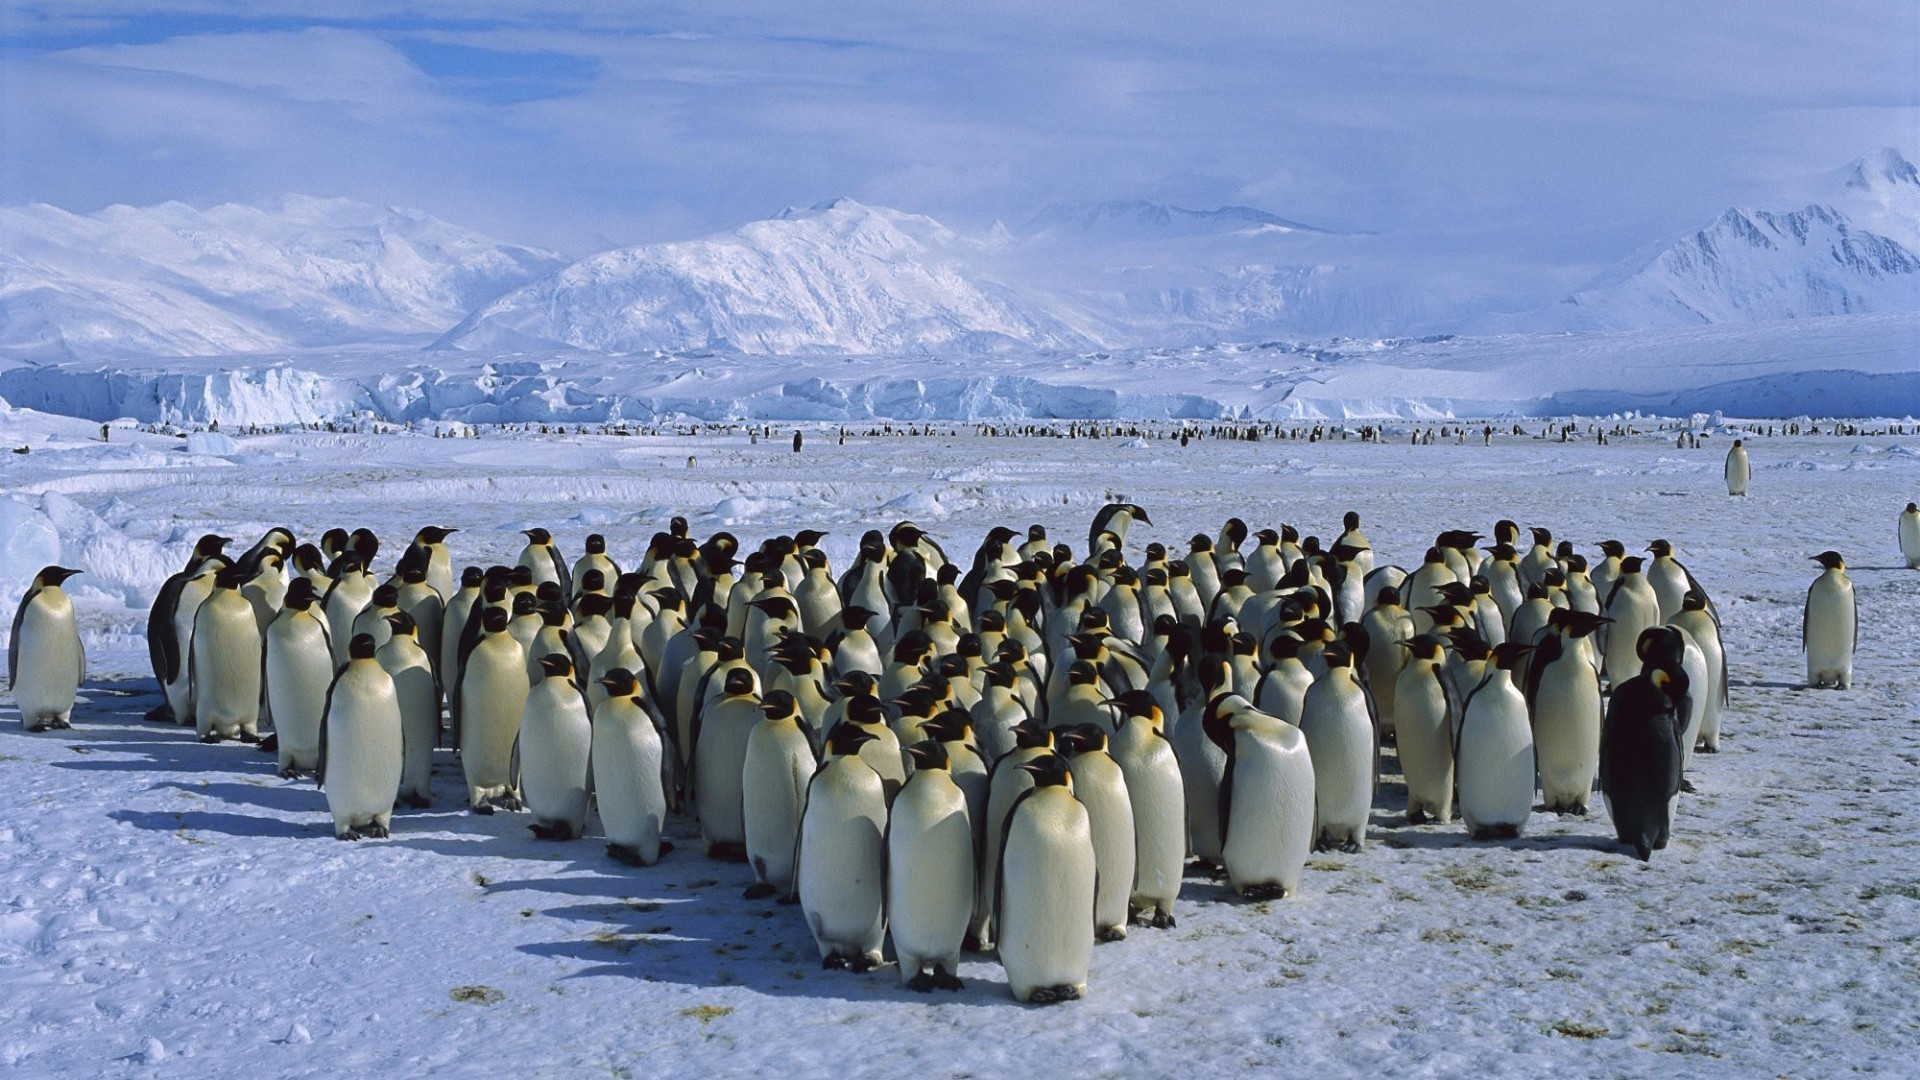 The crowd of penguins in Antarctica